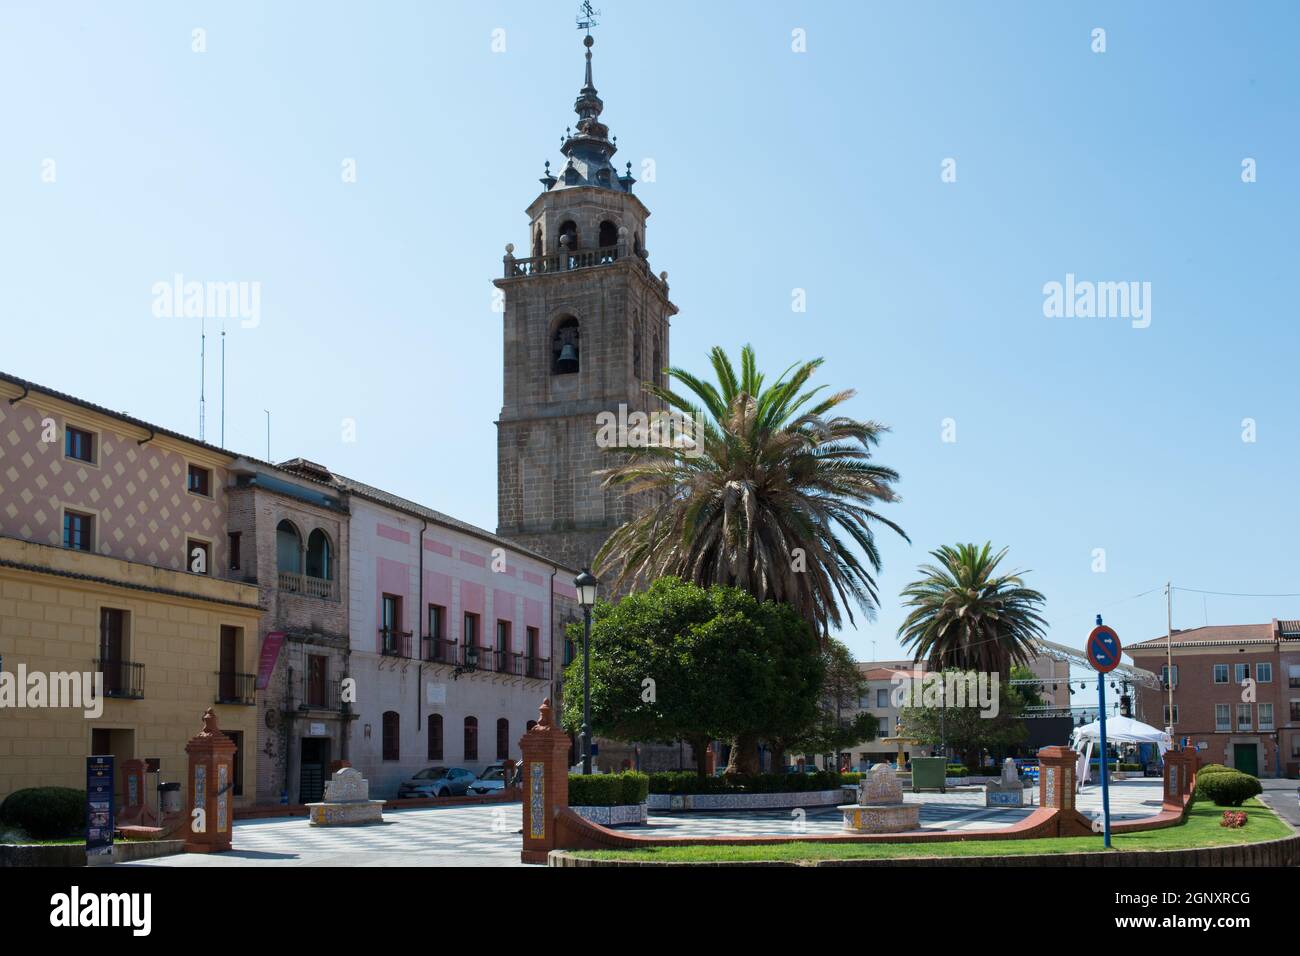 TALAVERA DE LA REINA, SPAIN - Jul 31, 2021: Beautiful view of a public park and church tower in Talavera de la Reina, Spain Stock Photo